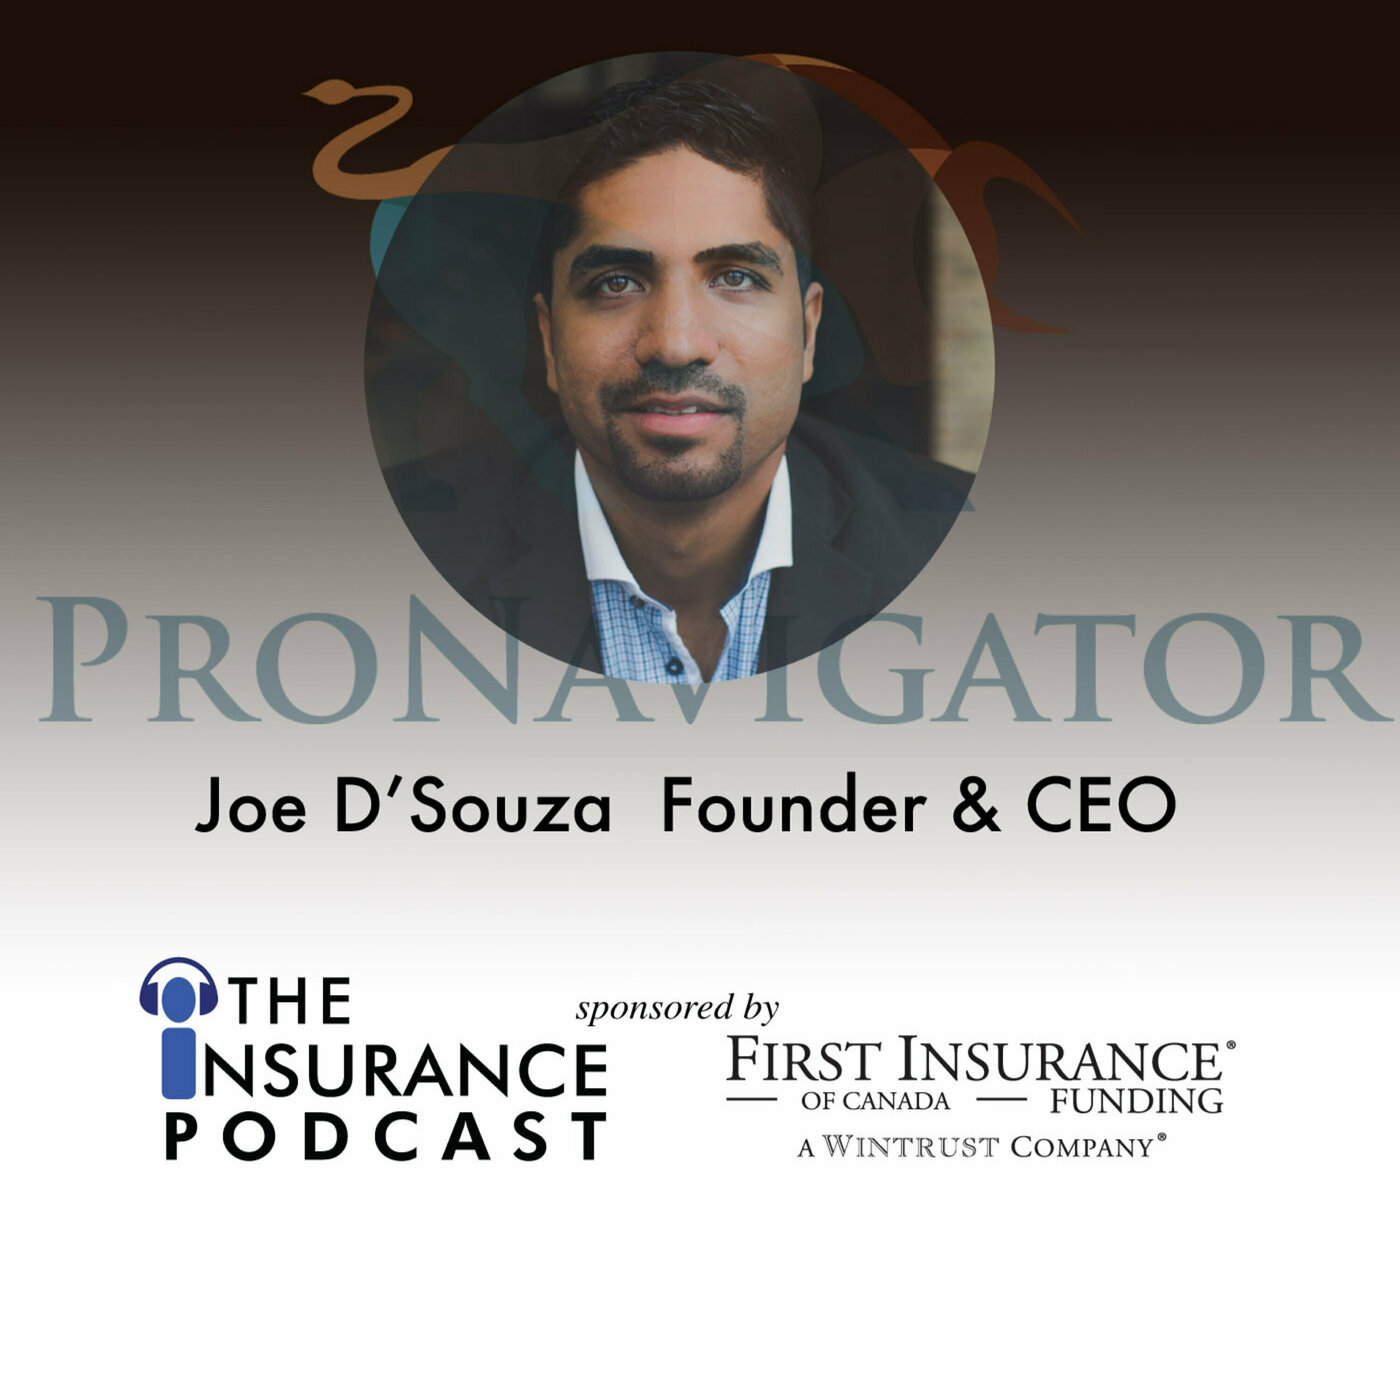 Joe D'Souza Founder and CEO-Pro Navigator Image